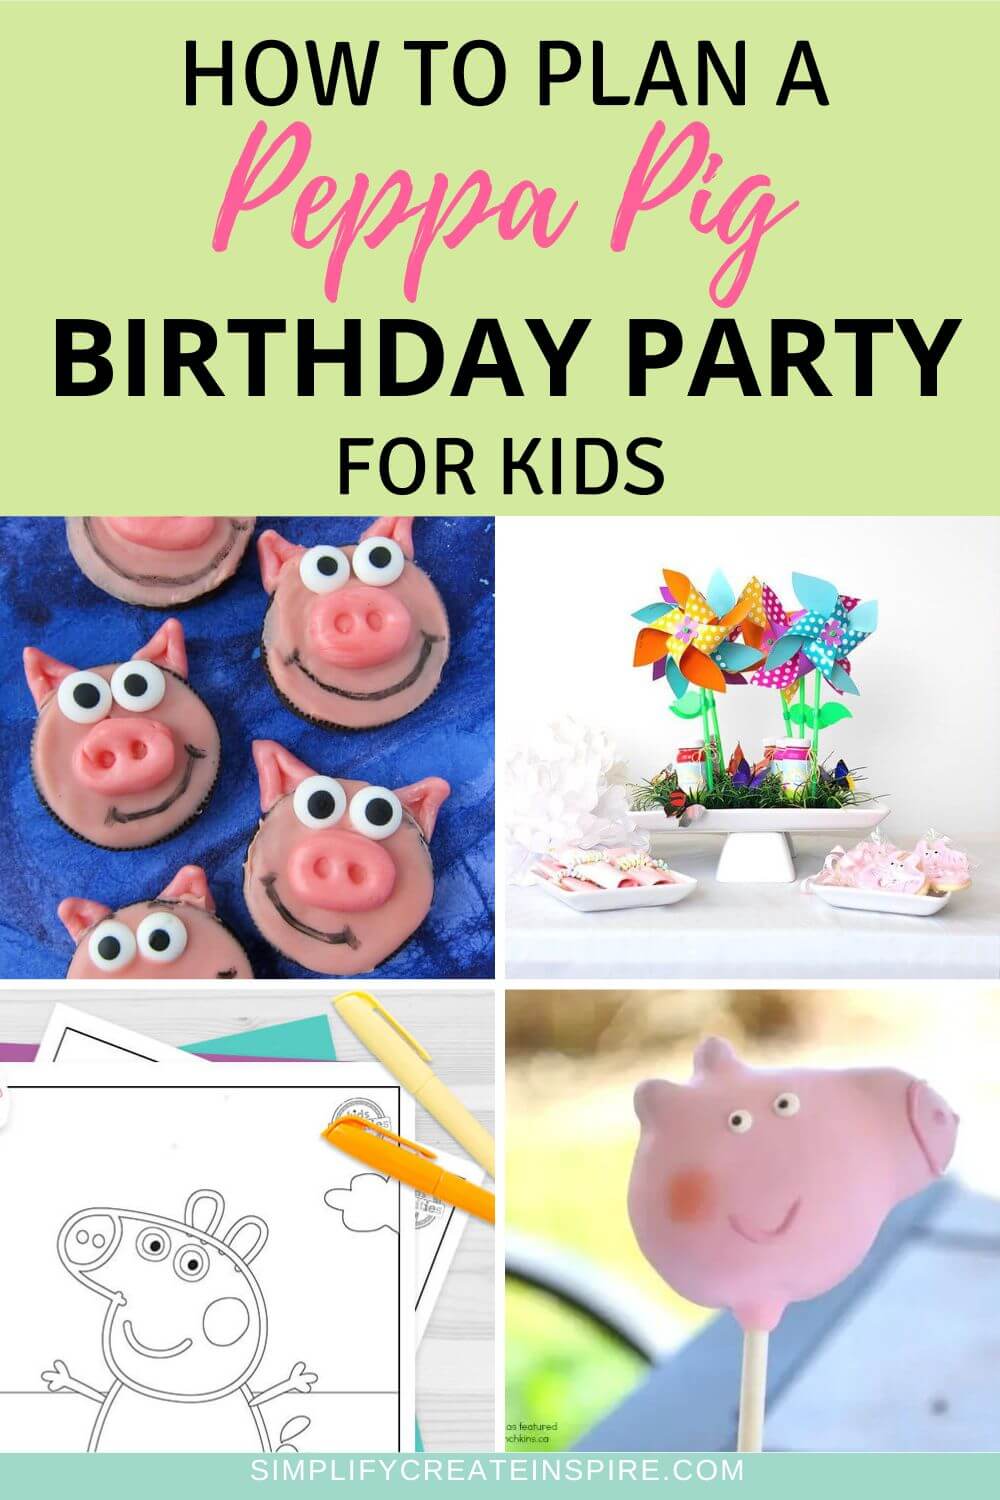 Peppa Pig themed birthday party FAQ